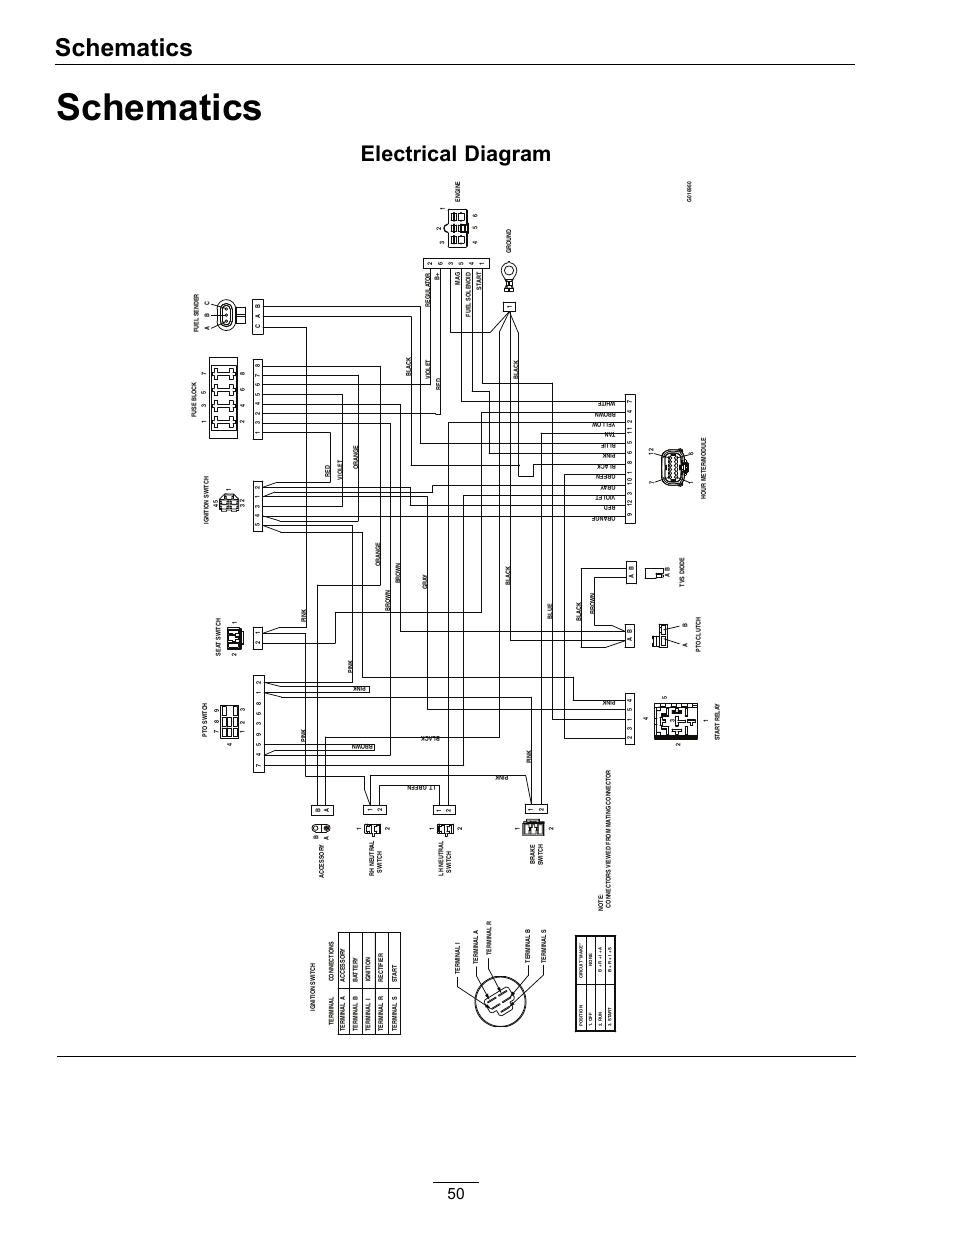 kz750 wiring diagram